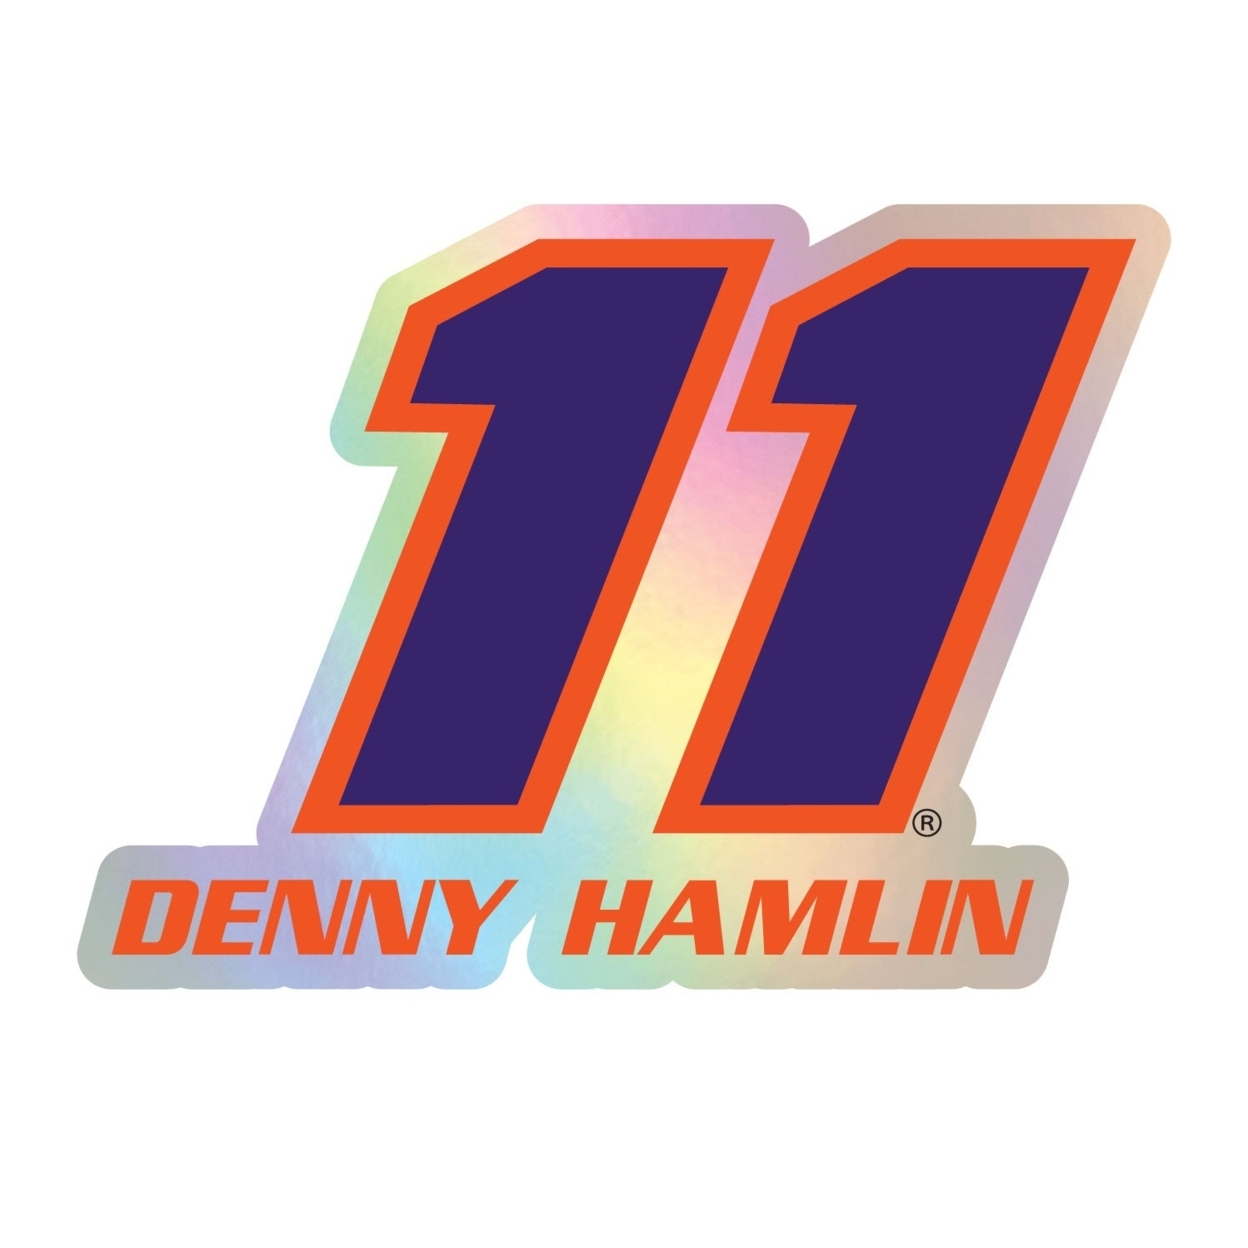 #11 Denny Hamlin Laser Cut Holographic Decal - 8-Inch